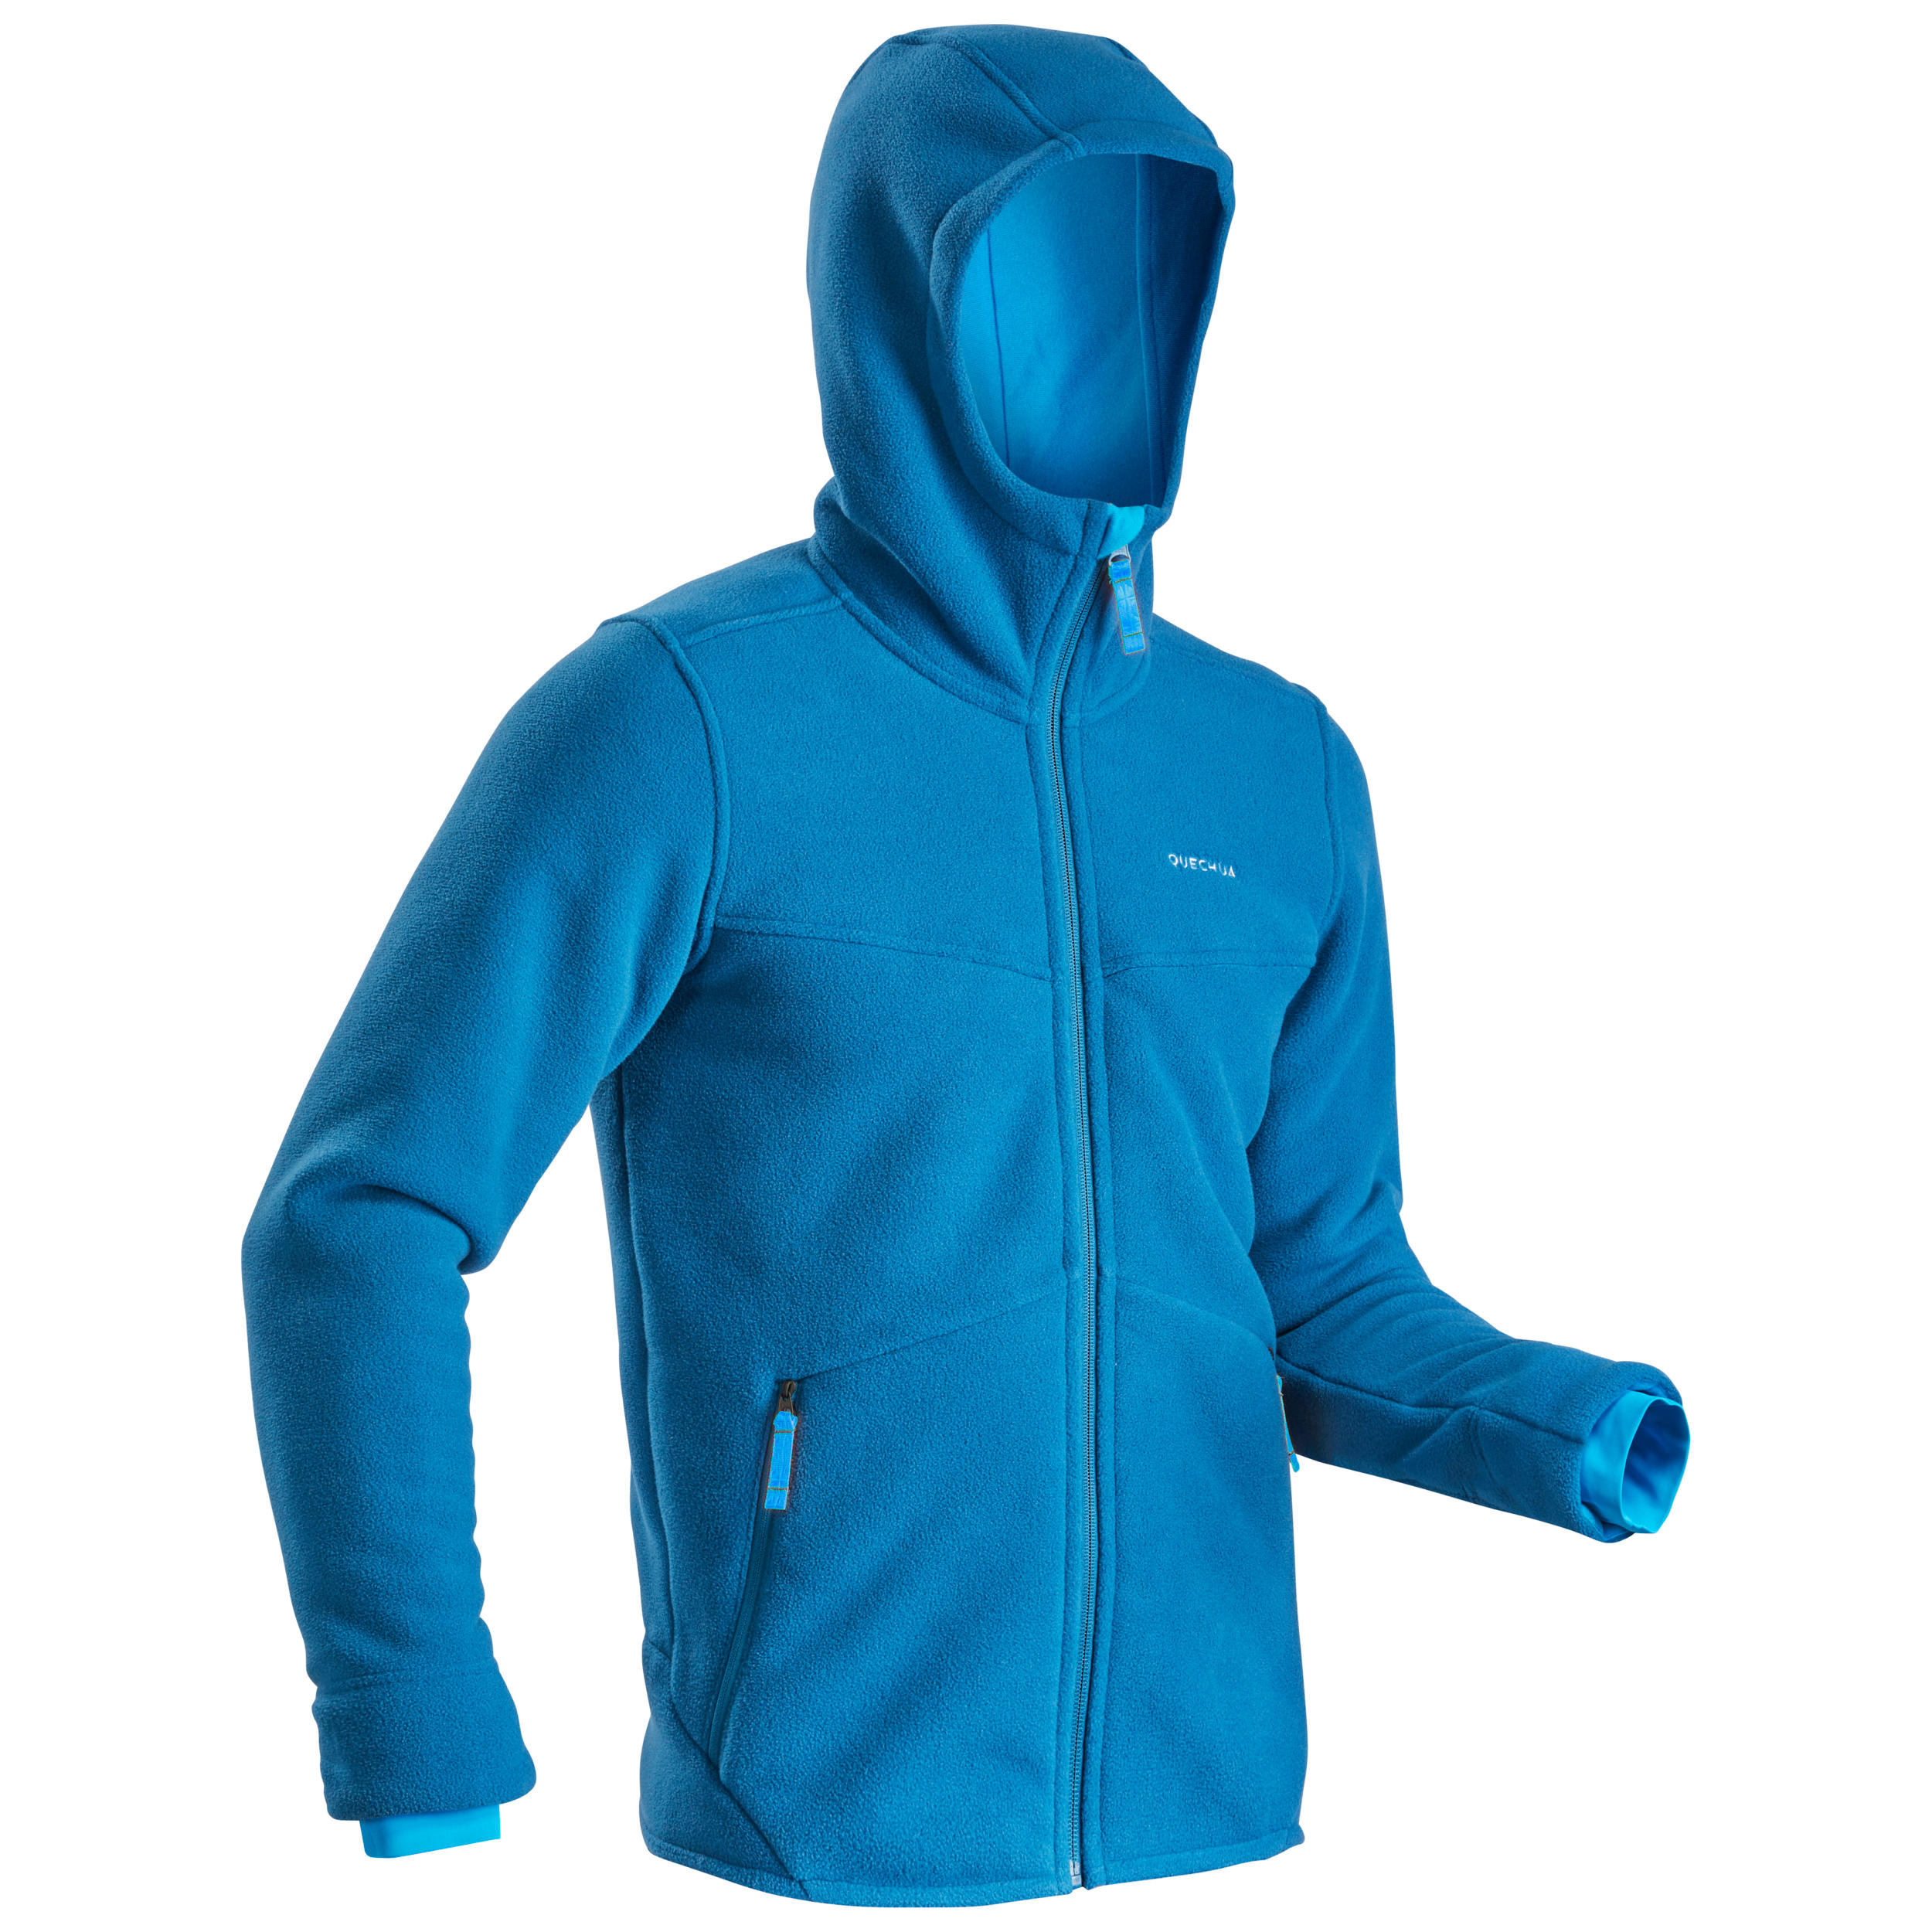 Men's warm hiking fleece jacket - SH100 